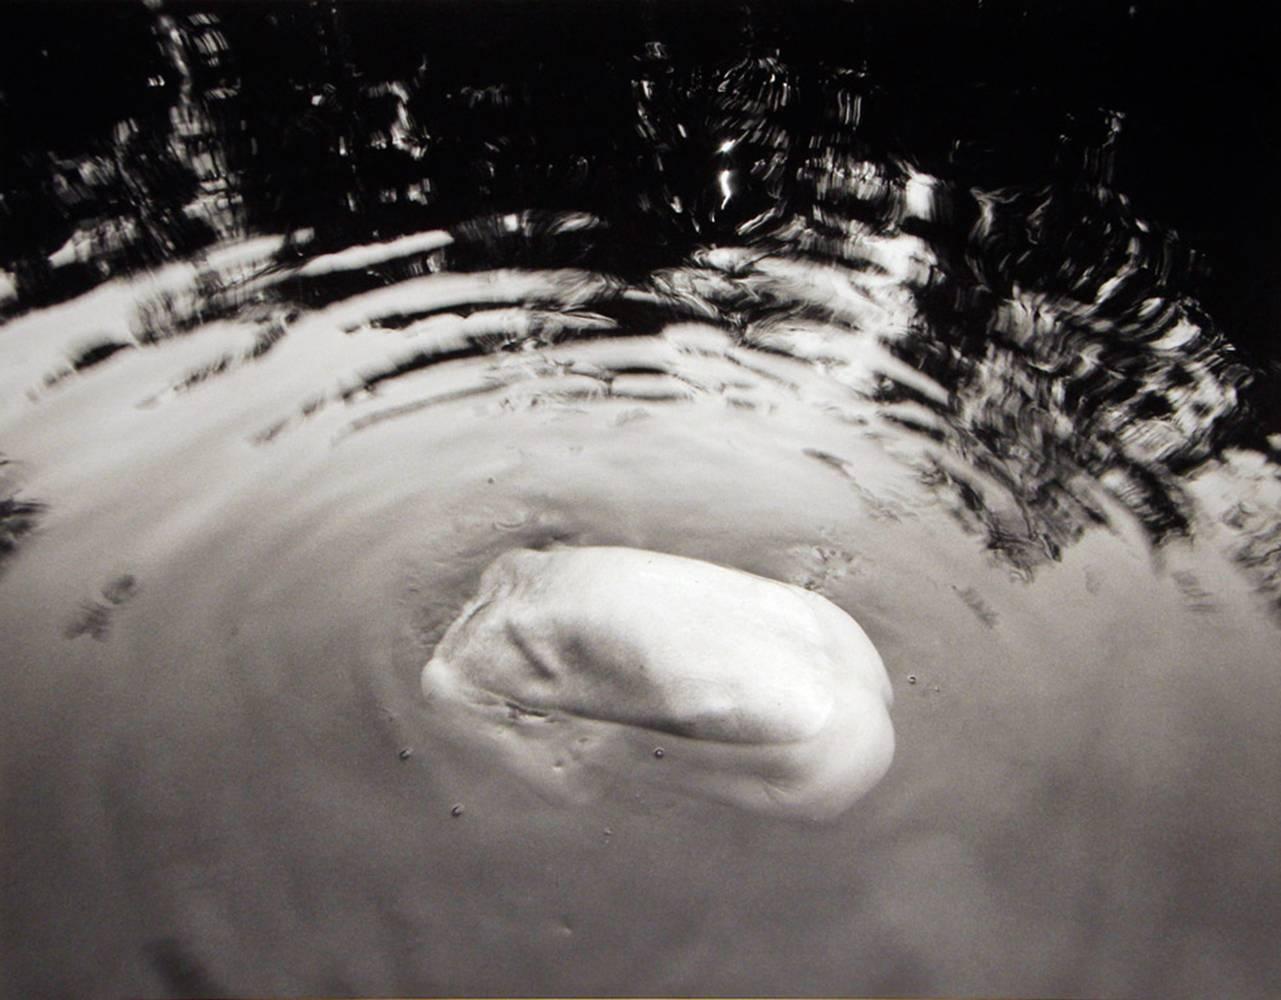 Arno Rafael Minkkinen Black and White Photograph - Waiting for the Snake